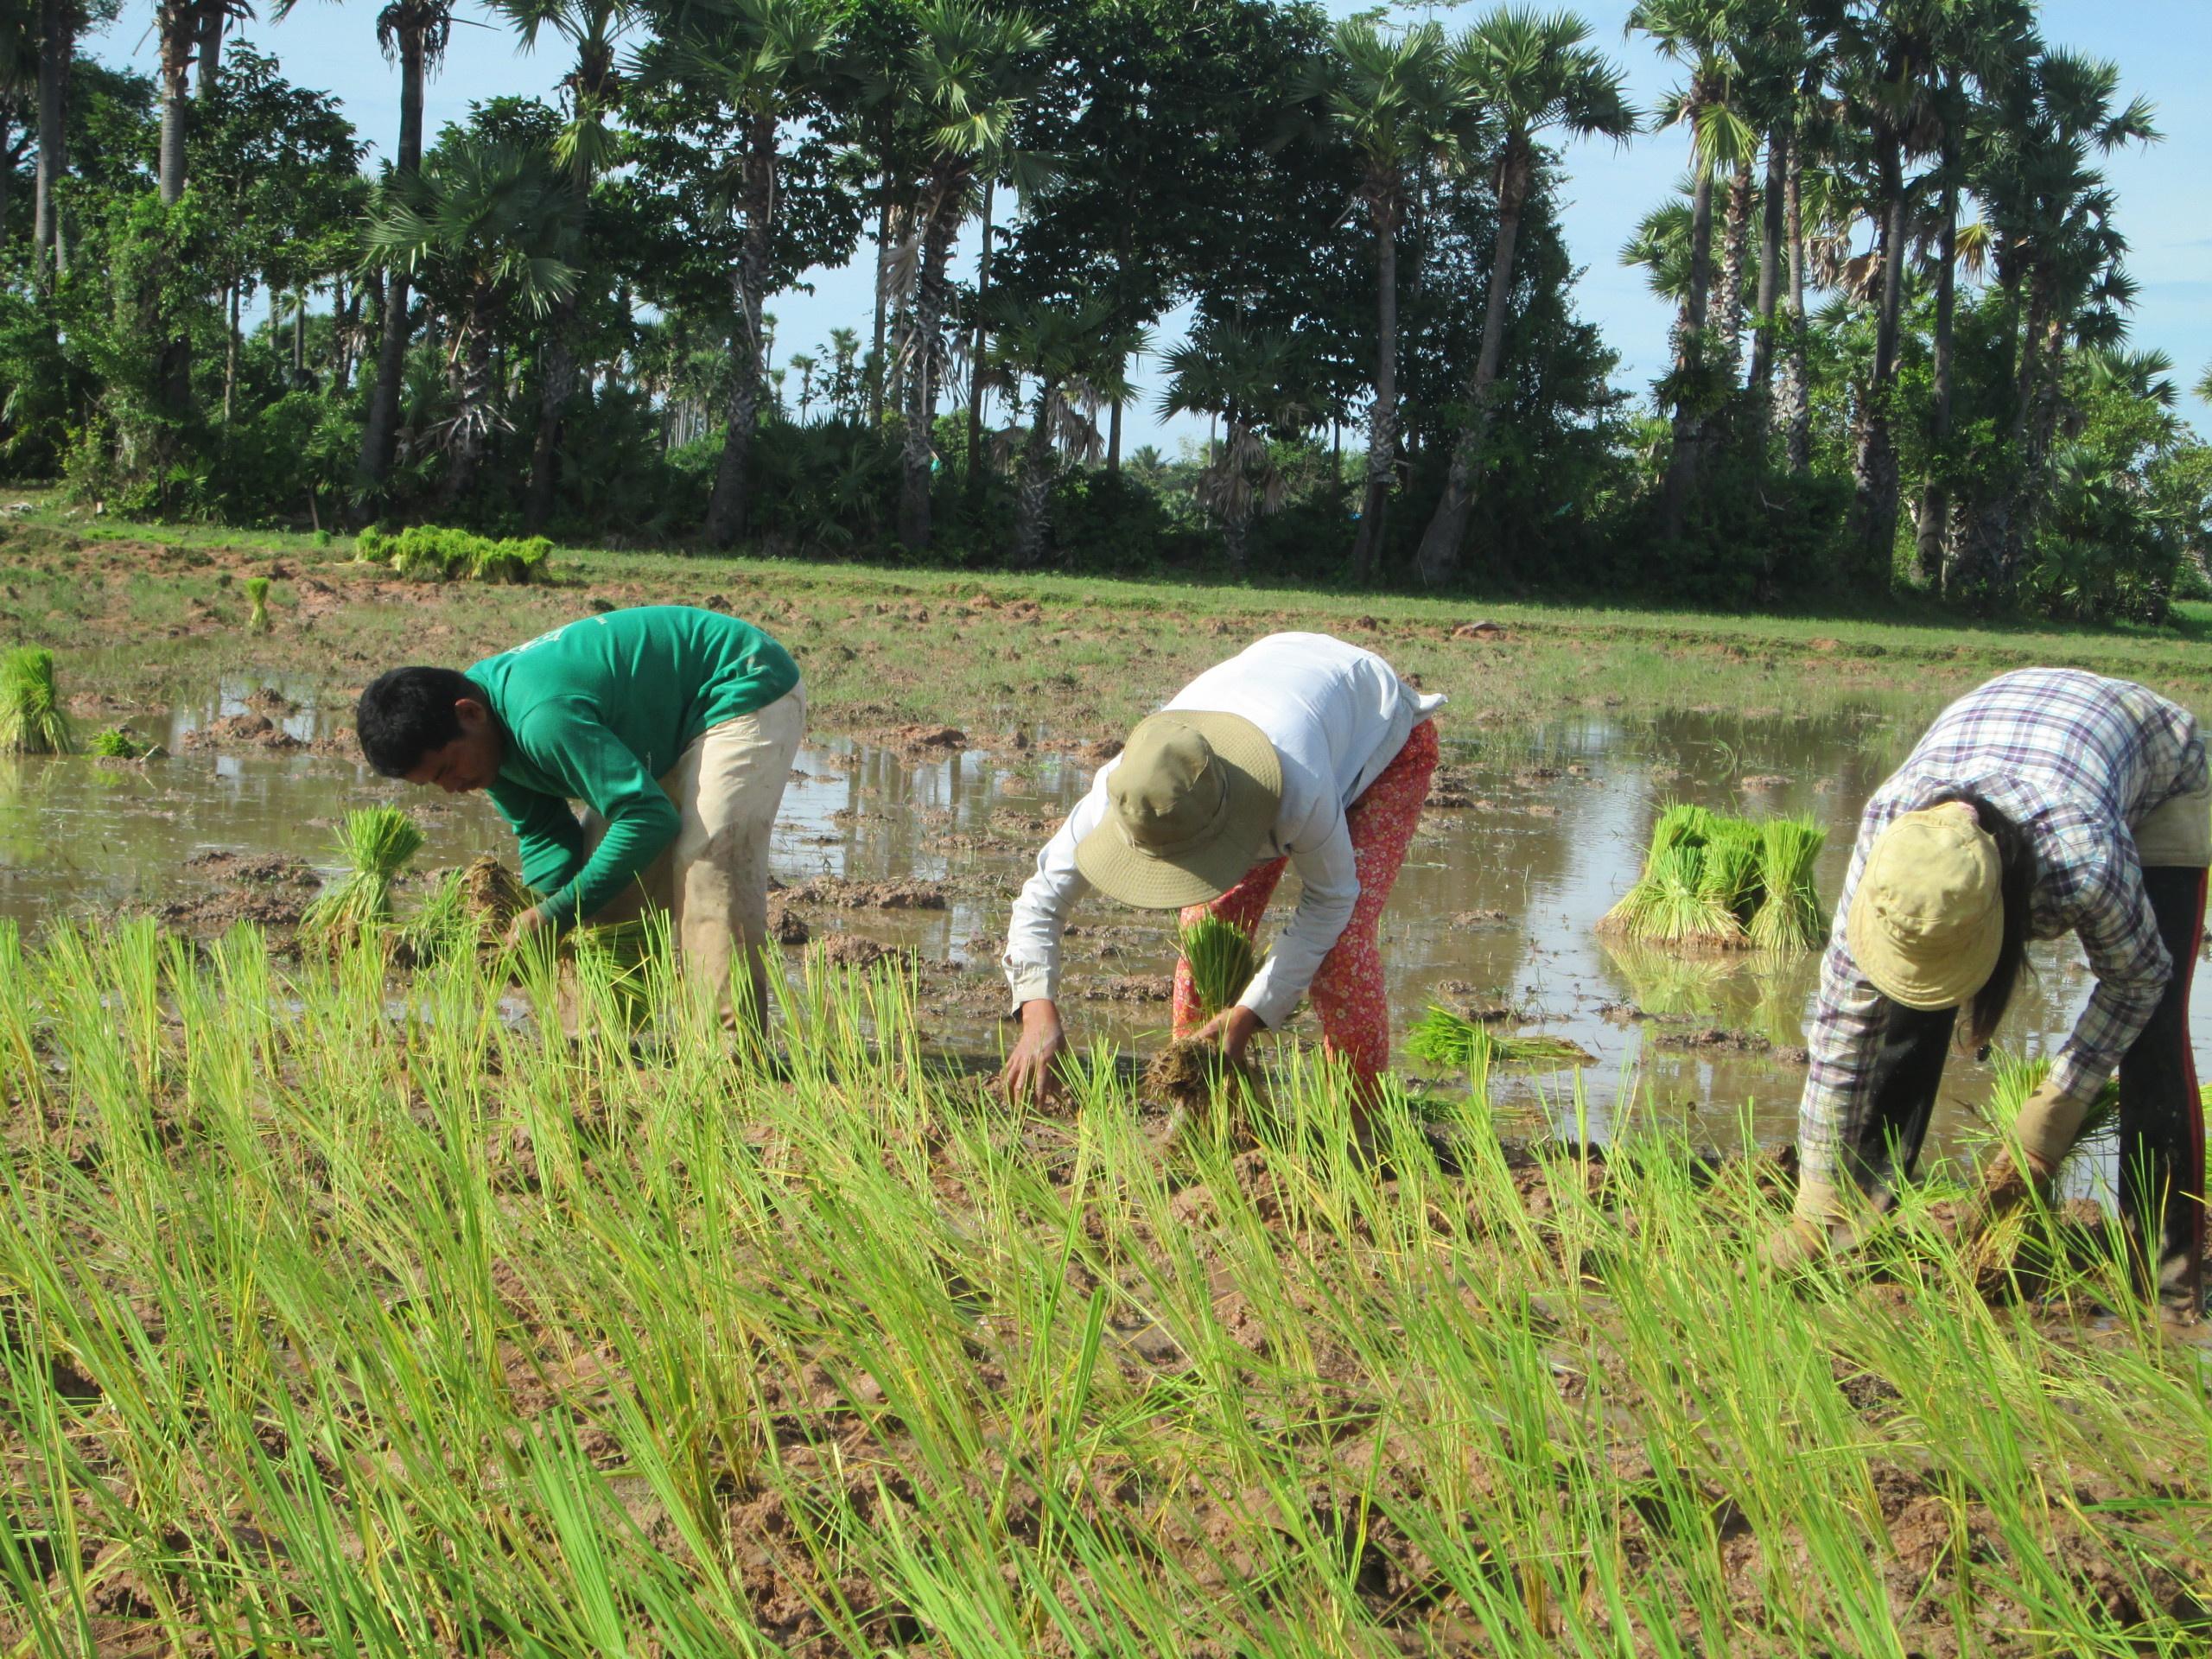 People work in the rice feild